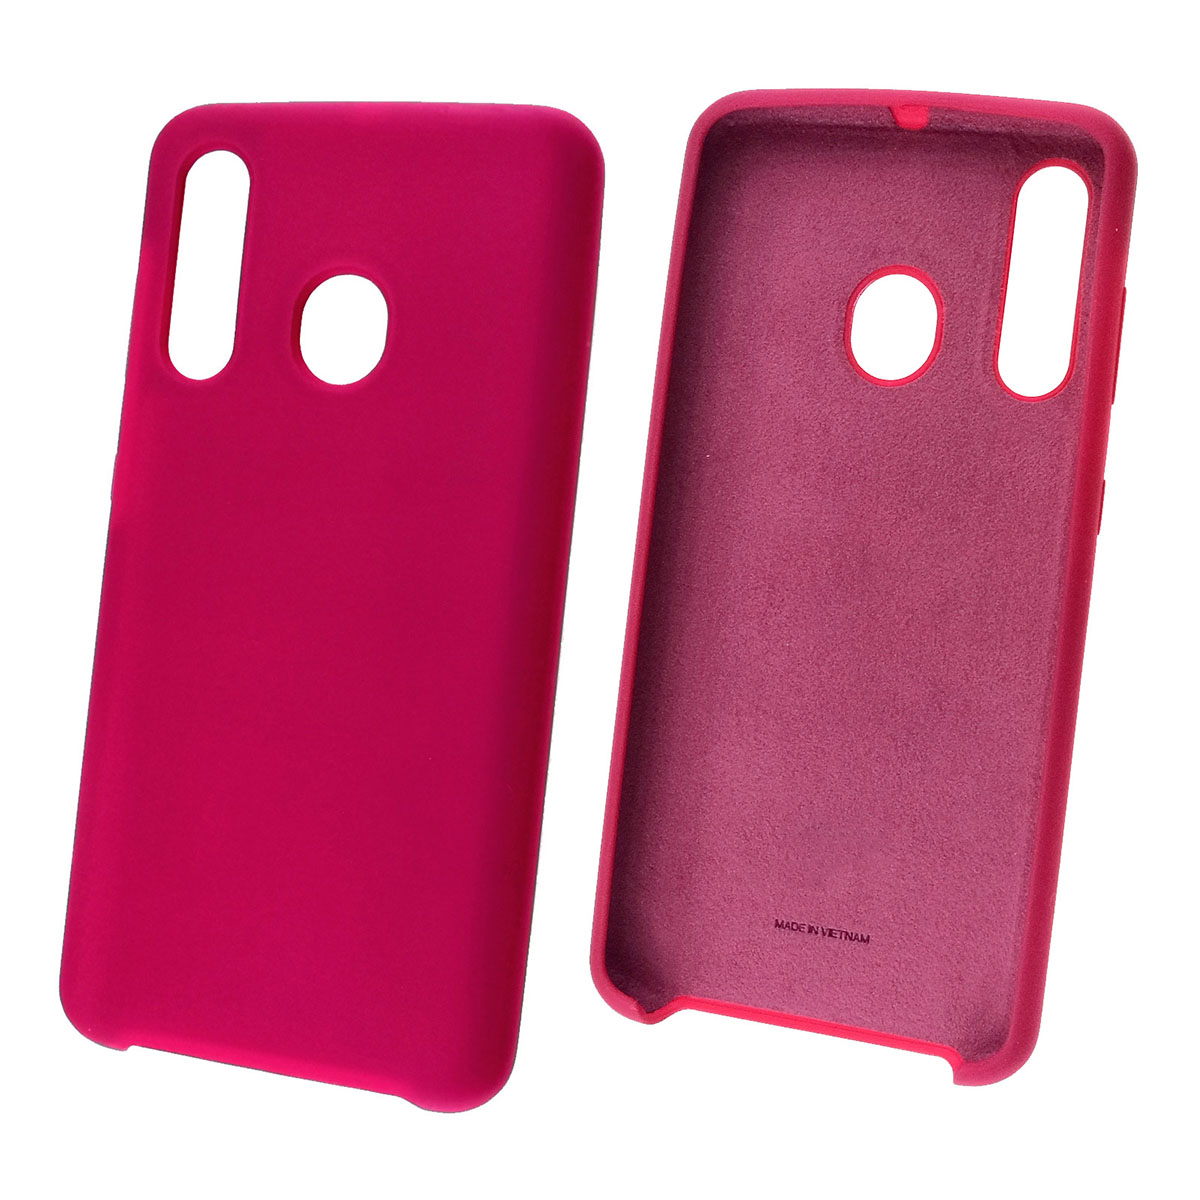 Чехол накладка Silicon Cover для SAMSUNG Galaxy A60 2019 (SM-A605), Galaxy M40 (SM-M405), силикон, бархат, цвет бордовый.